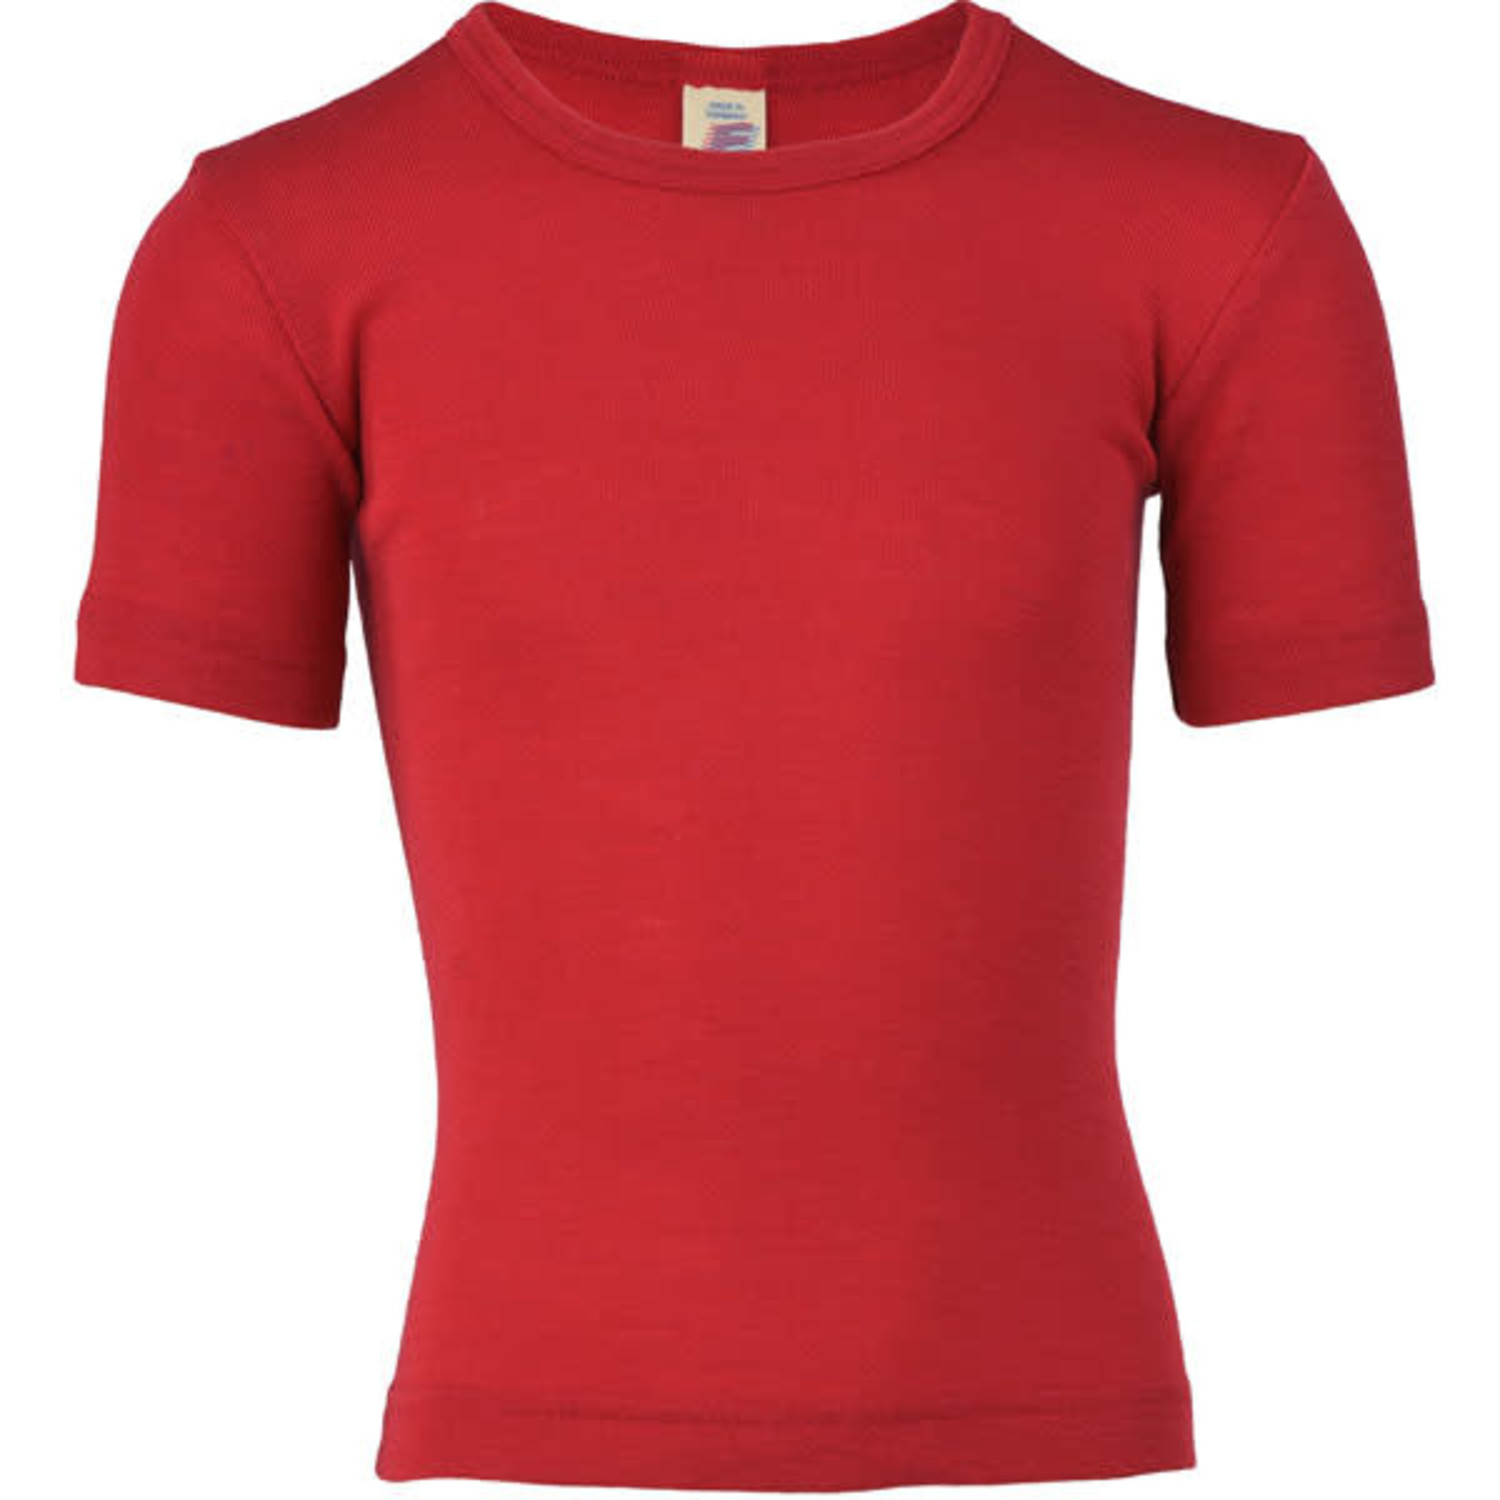 Wrok Elasticiteit ei Engel Natur - shirt korte mouw wol zijde kind * rood * | Natur-el - Natur-el